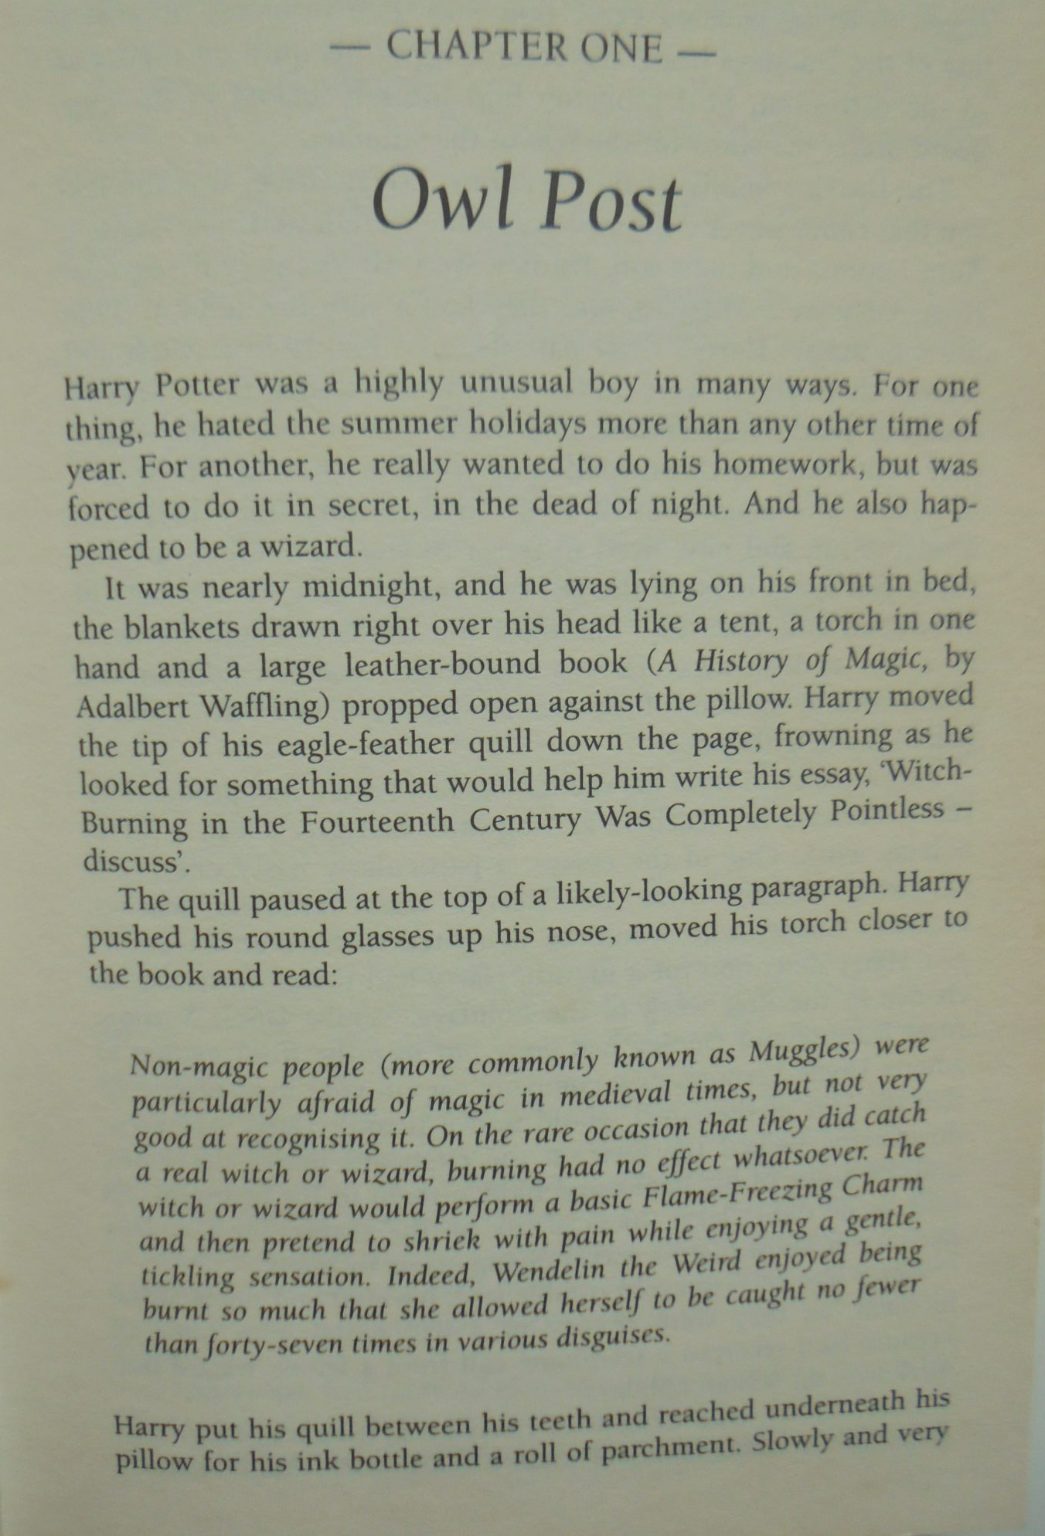 Harry Potter and the Prisoner of Azkaban. Hardback, 1st UK Edition, 9th print